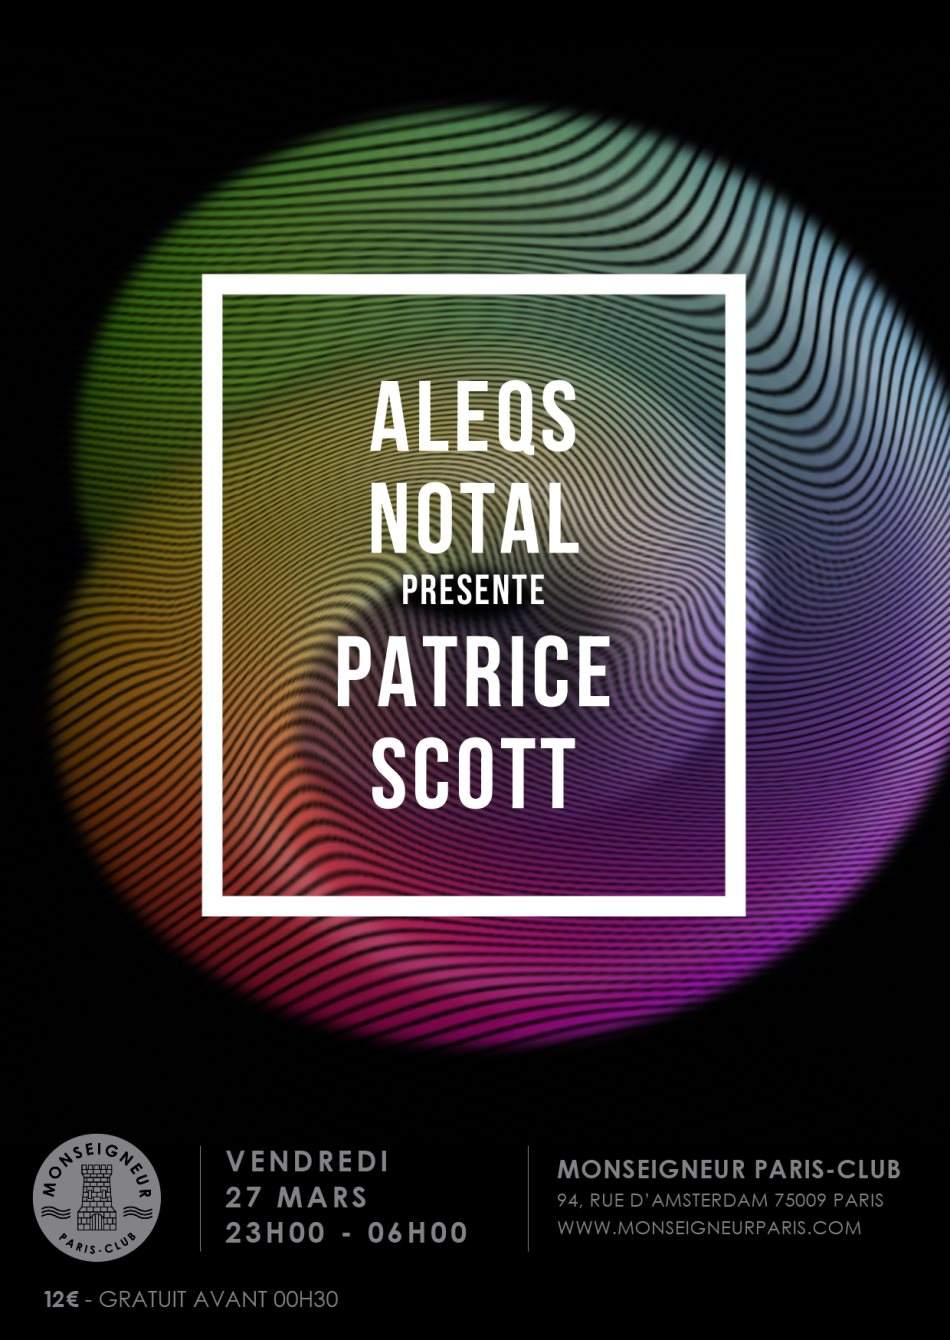 Aleqs Notal Présente: Patrice Scott - Página frontal